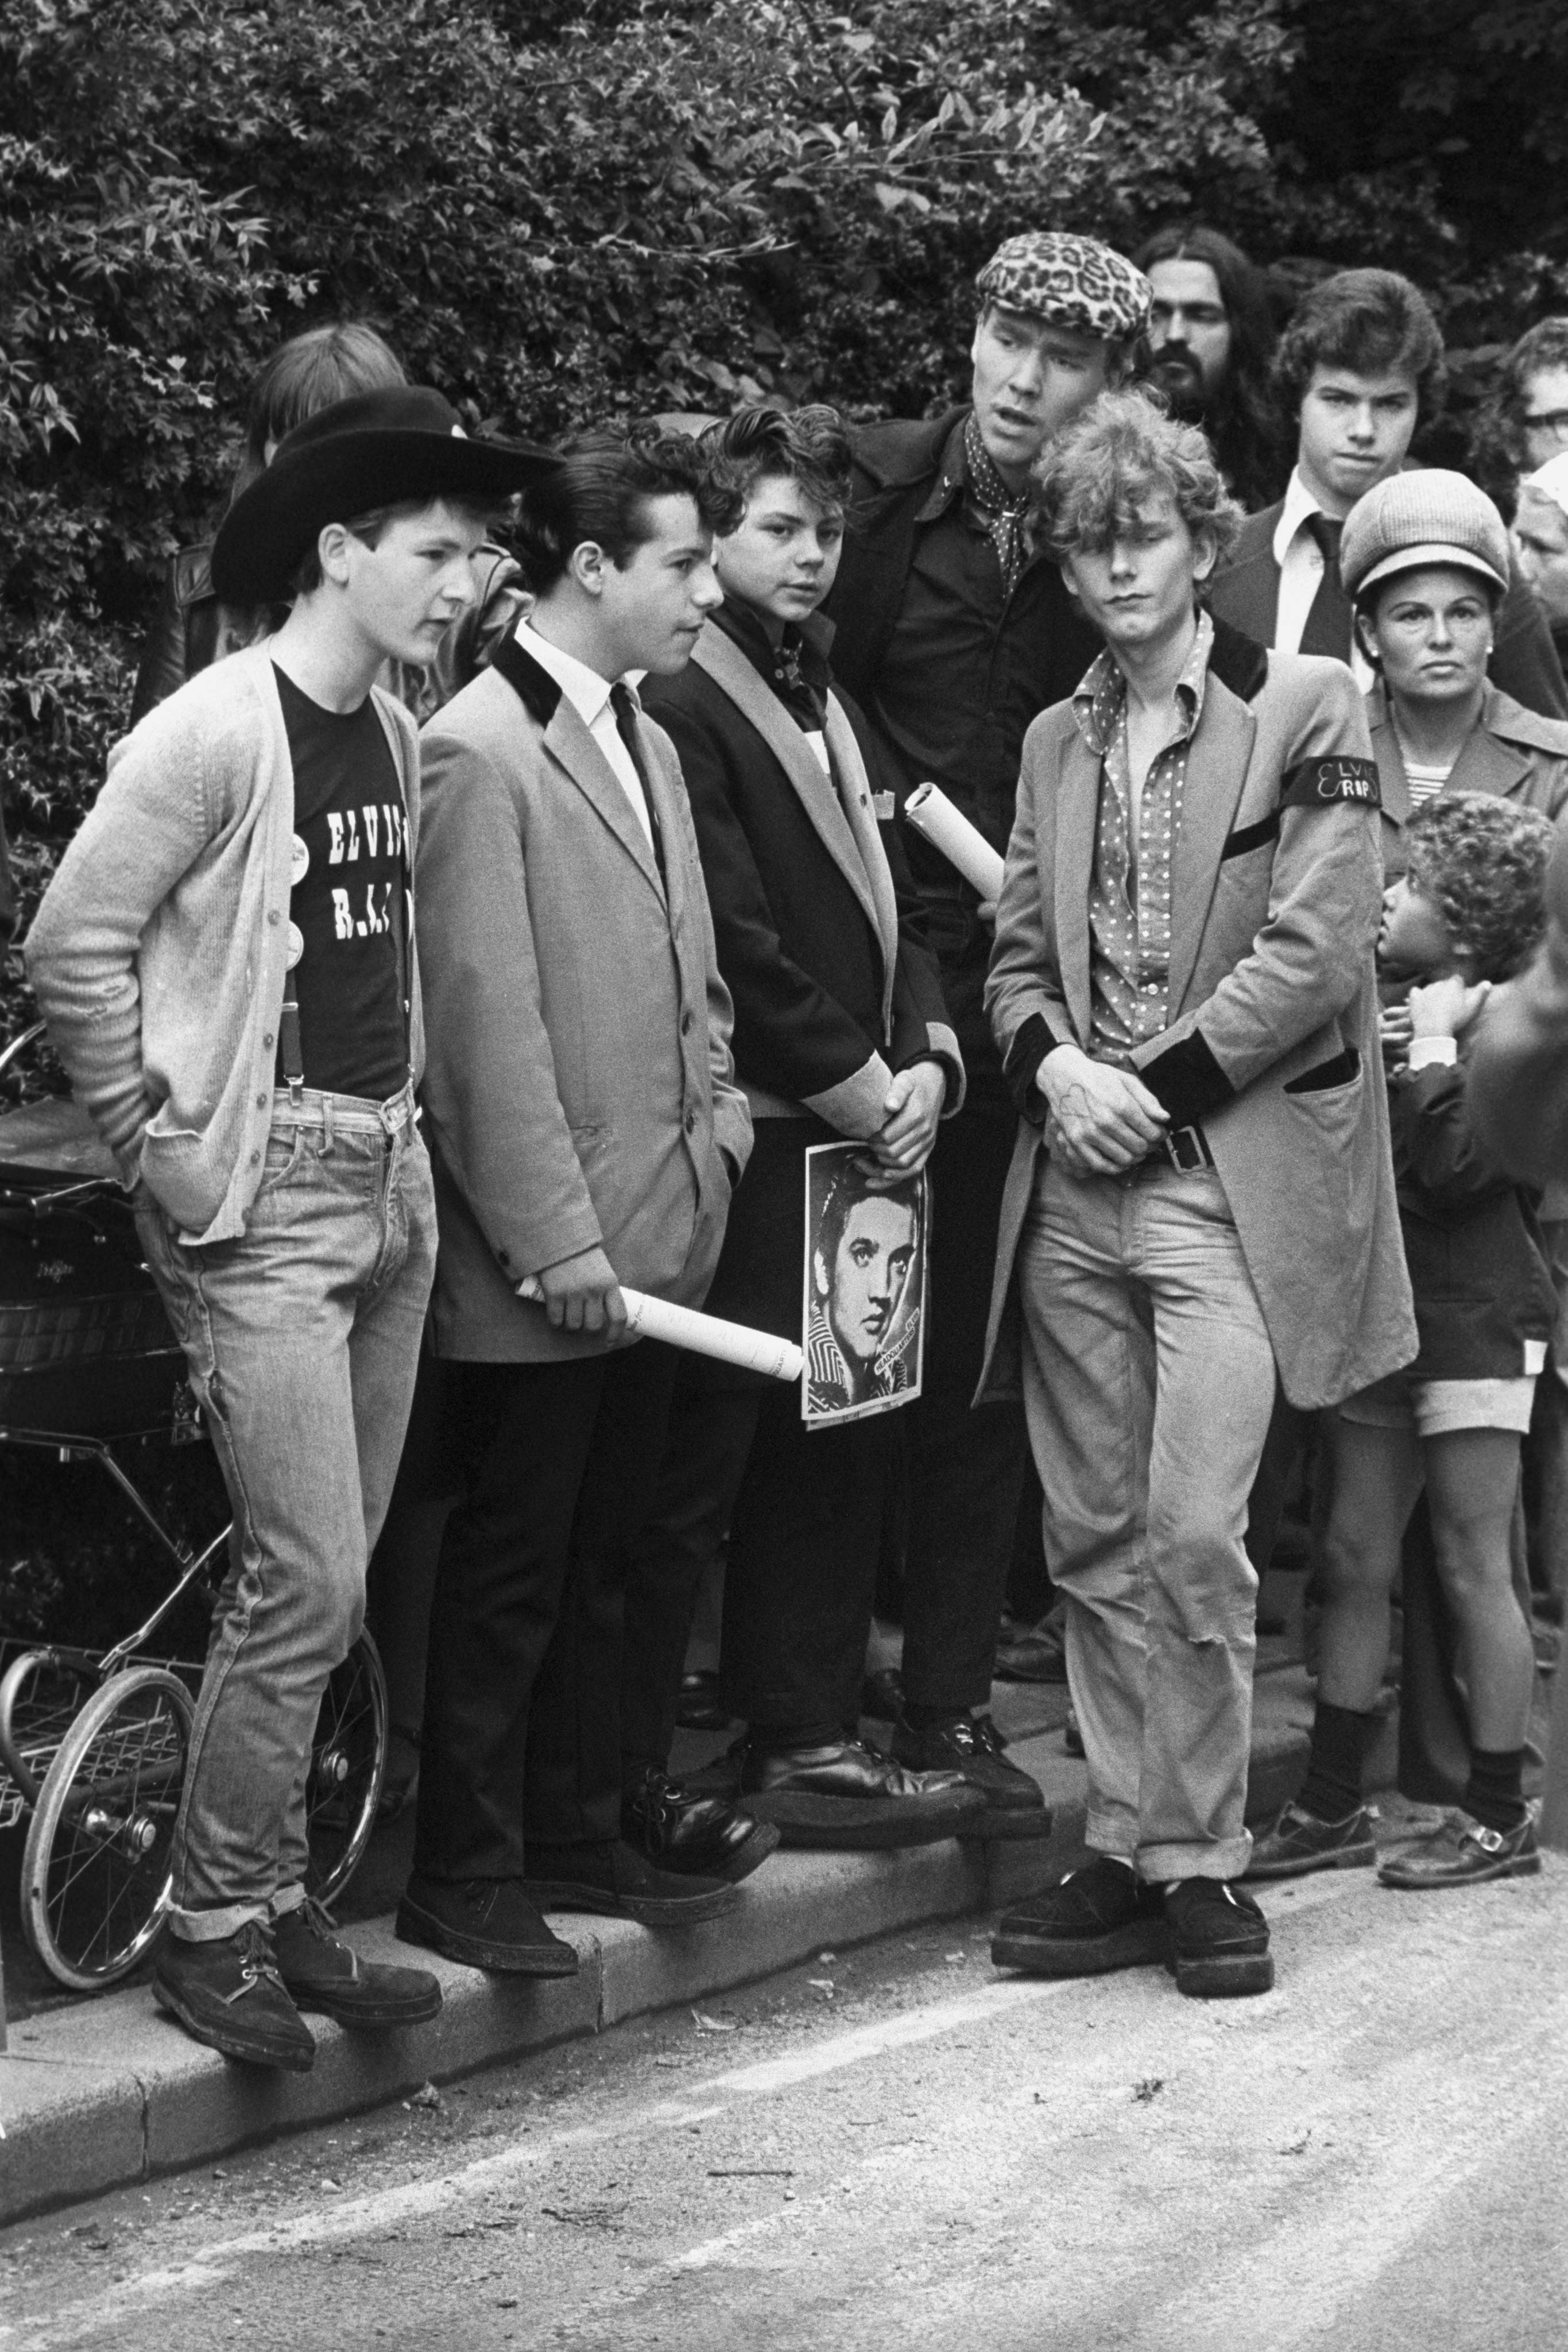 Teddy Boys At The Elvis Presley Memorial Service, London 1977 - Flashbak